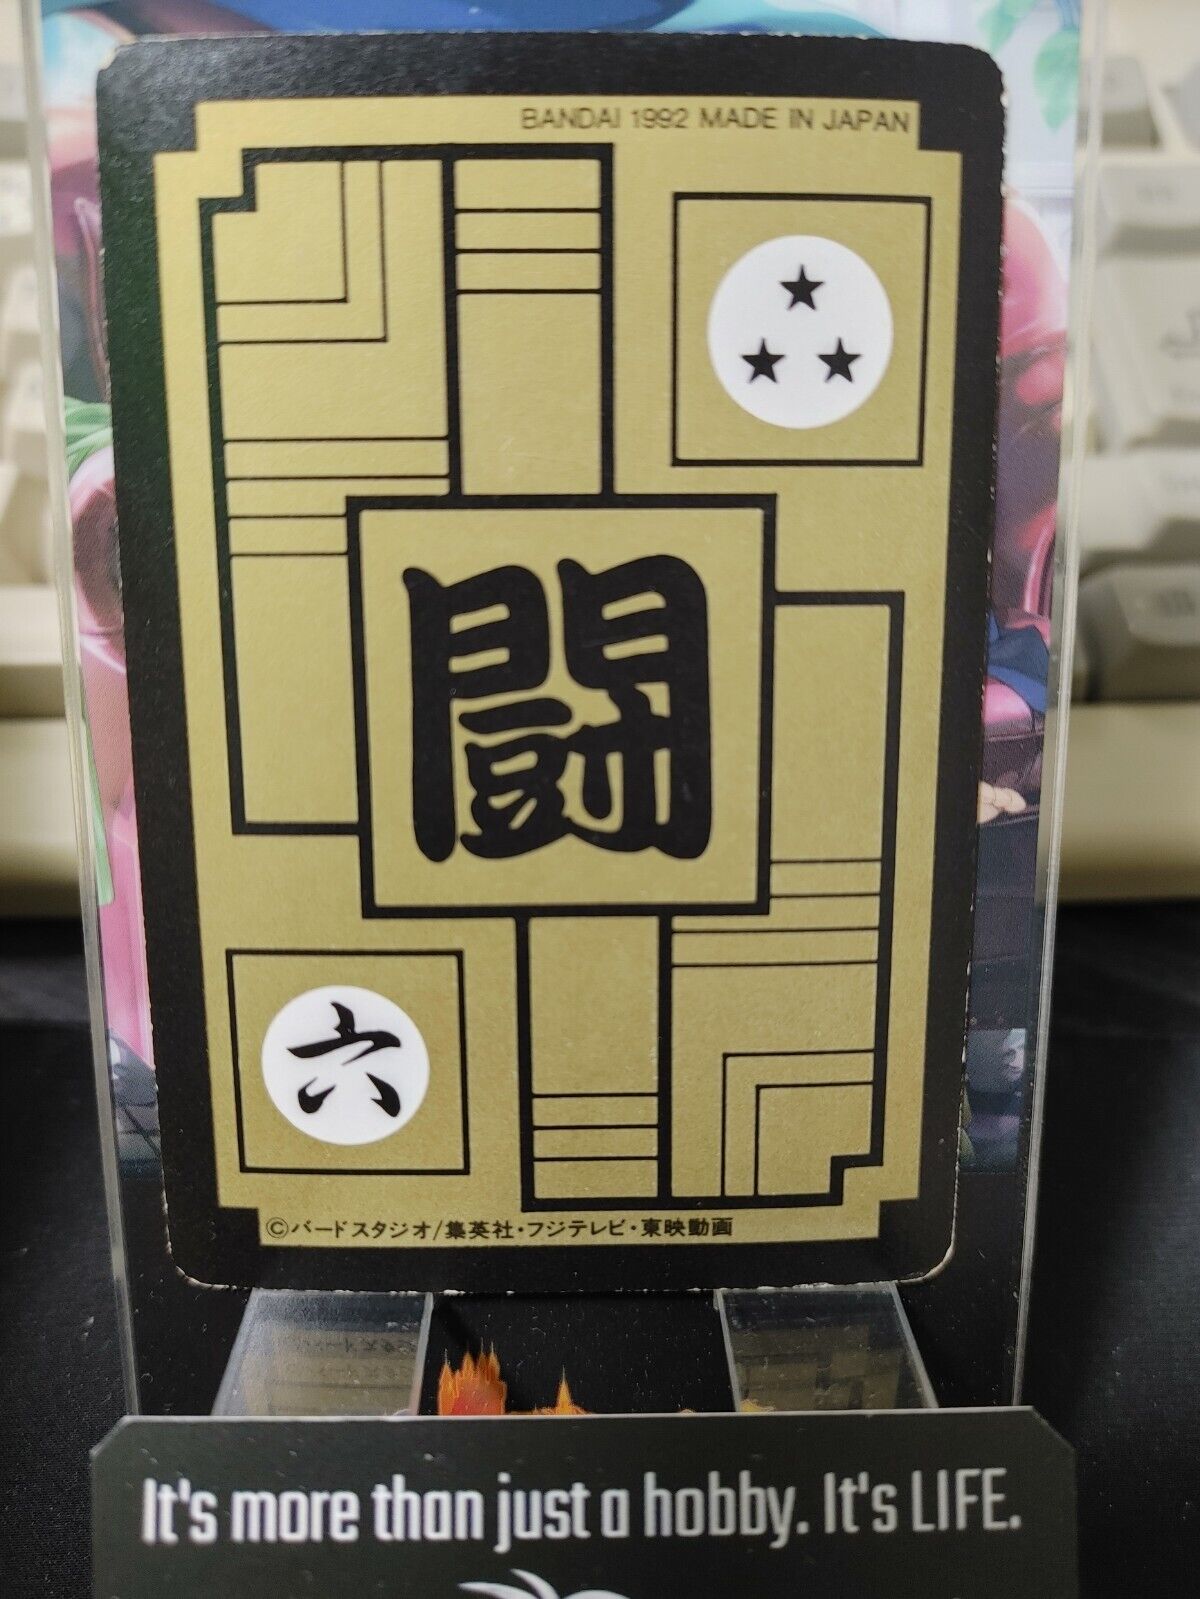 Dragon Ball Z Bandai Carddass Card Piccolo #396 Japanese Retro Vintage TCG Japan